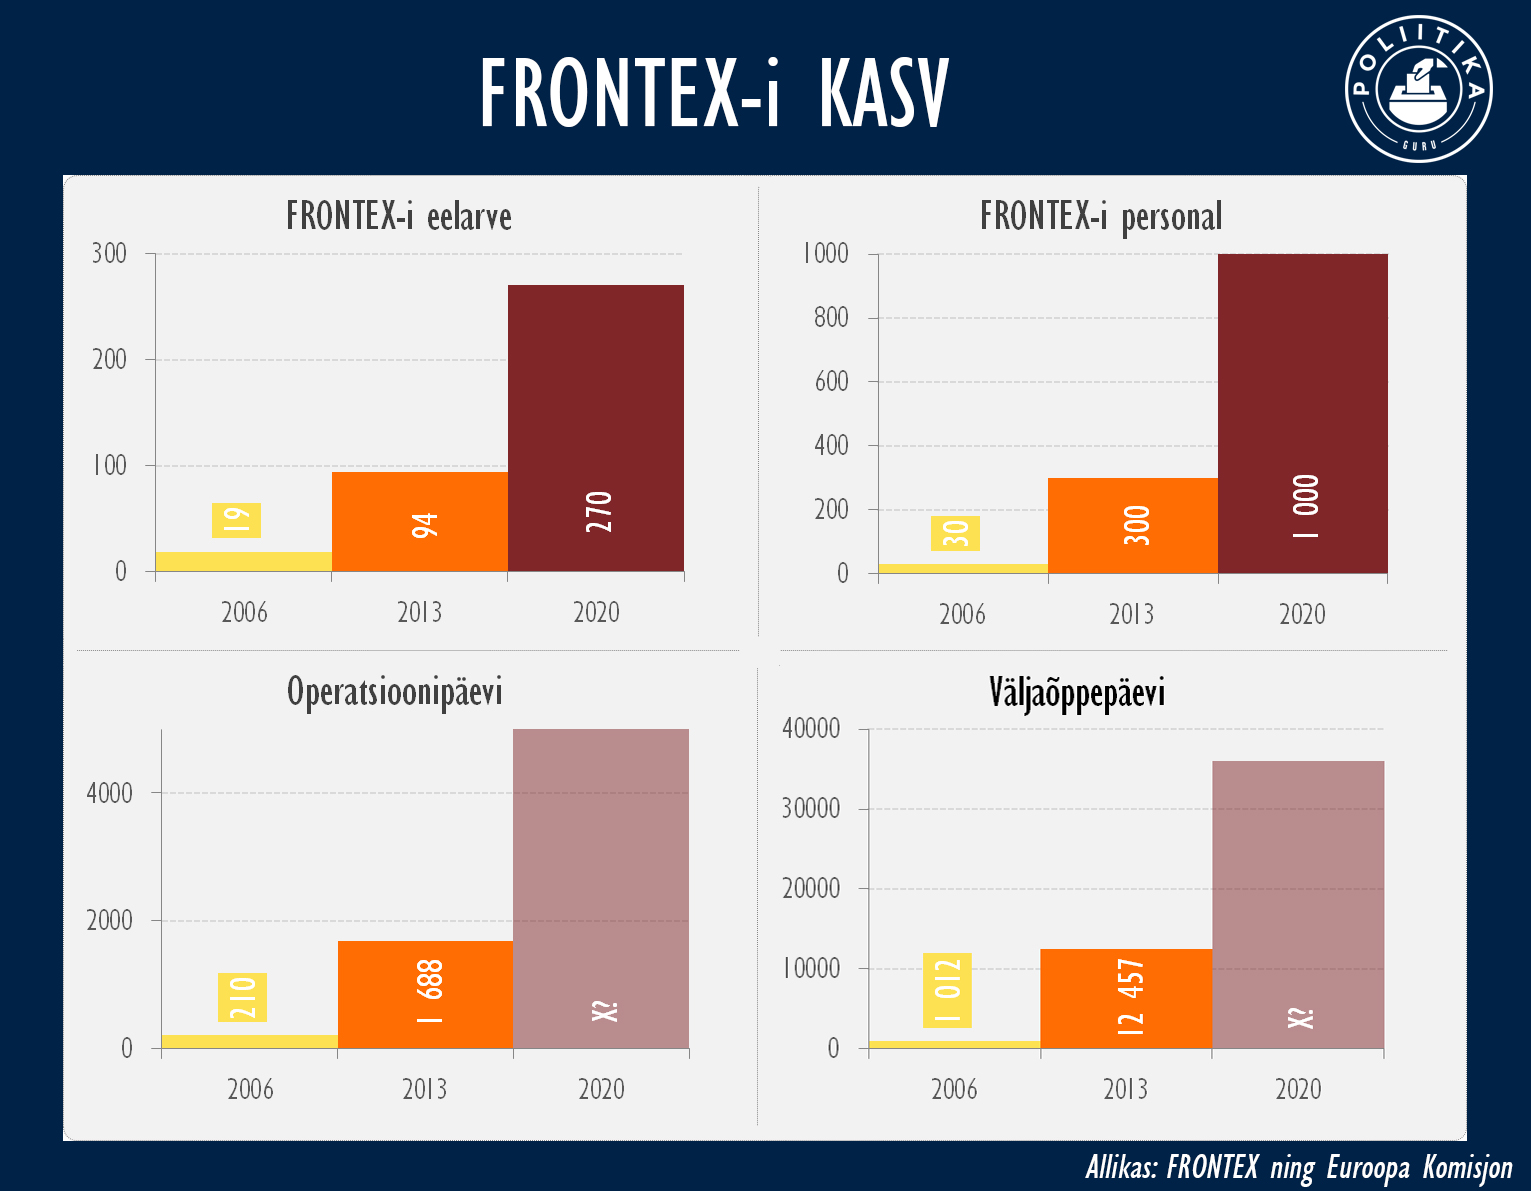 Frontexi kasv